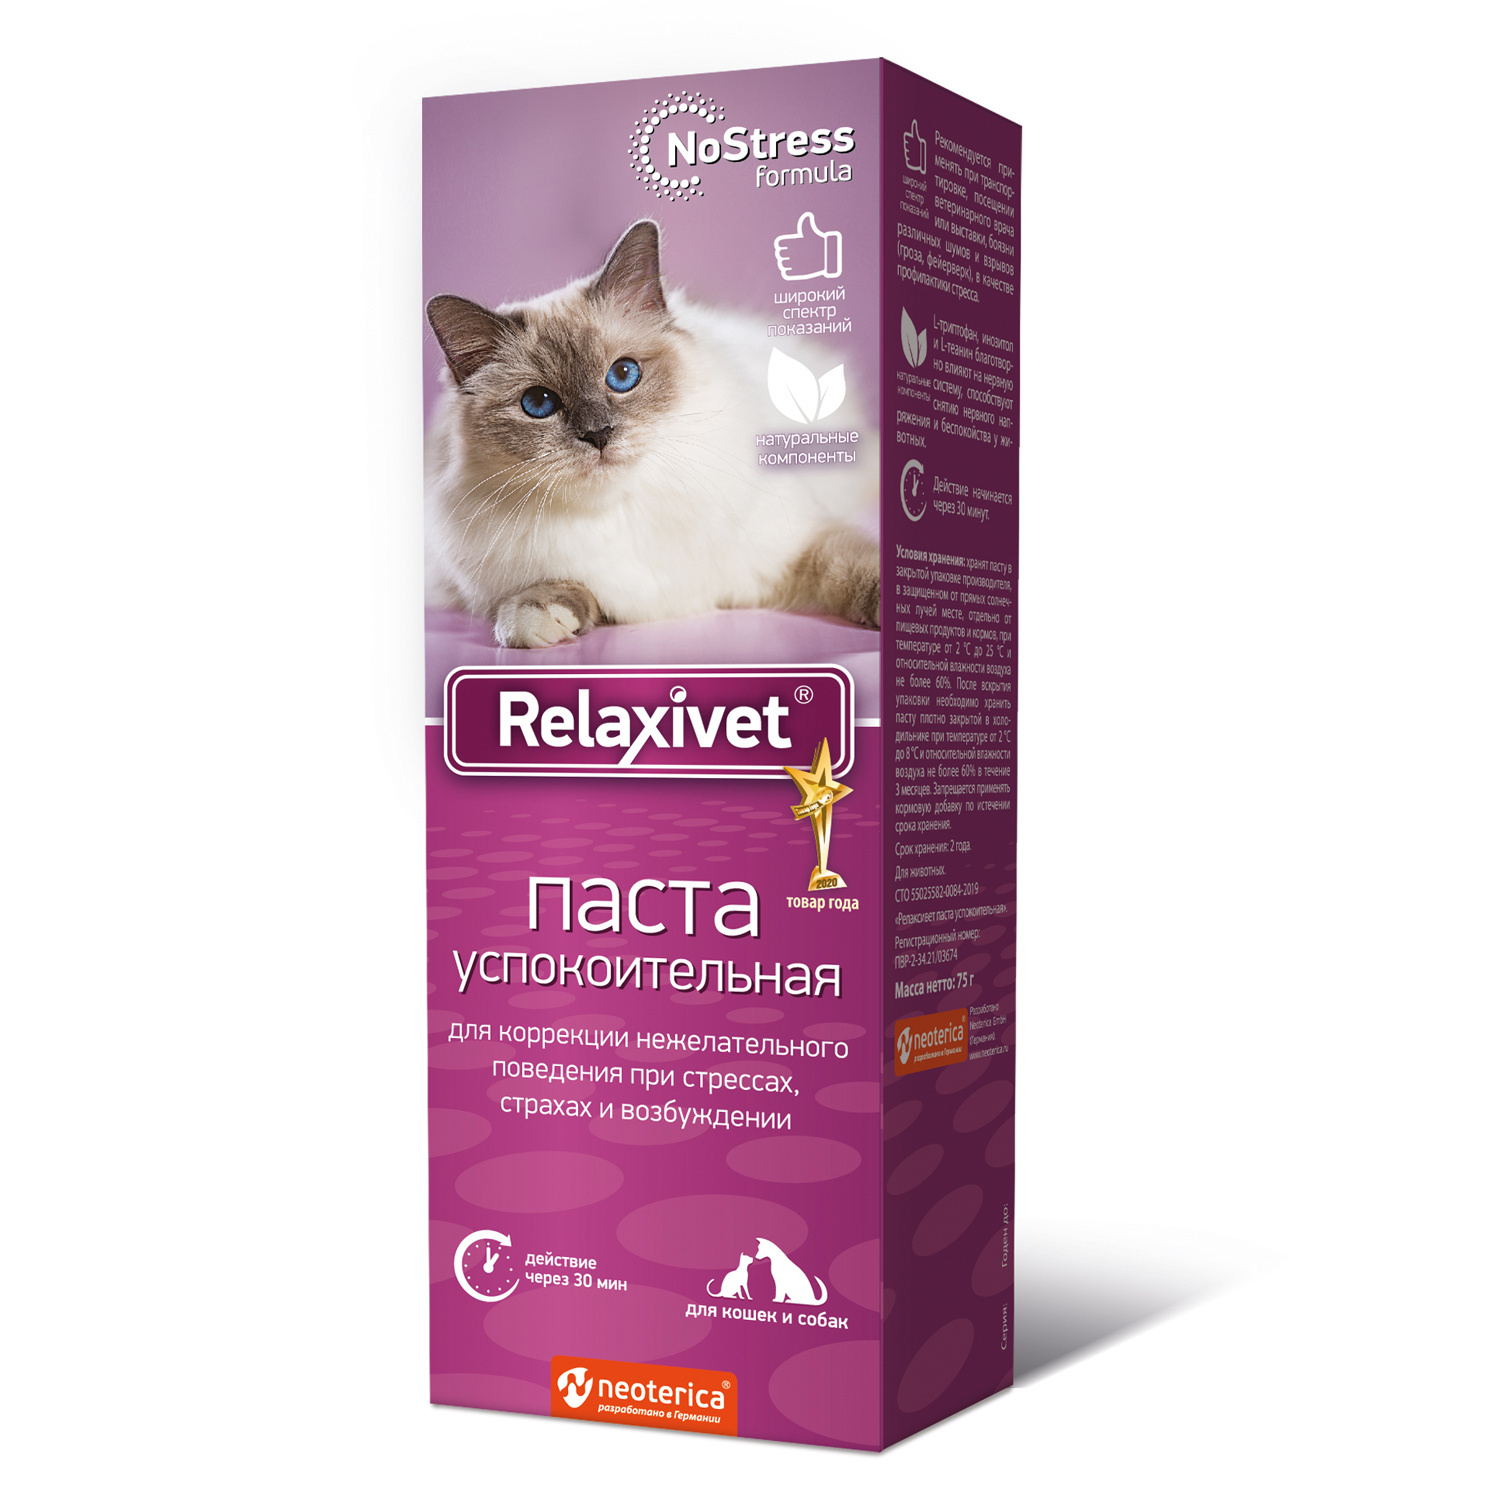 Relaxivet Relaxivet паста успокоительная, 75 г (95 г) паста для кошек relaxivet успокоительная 75г